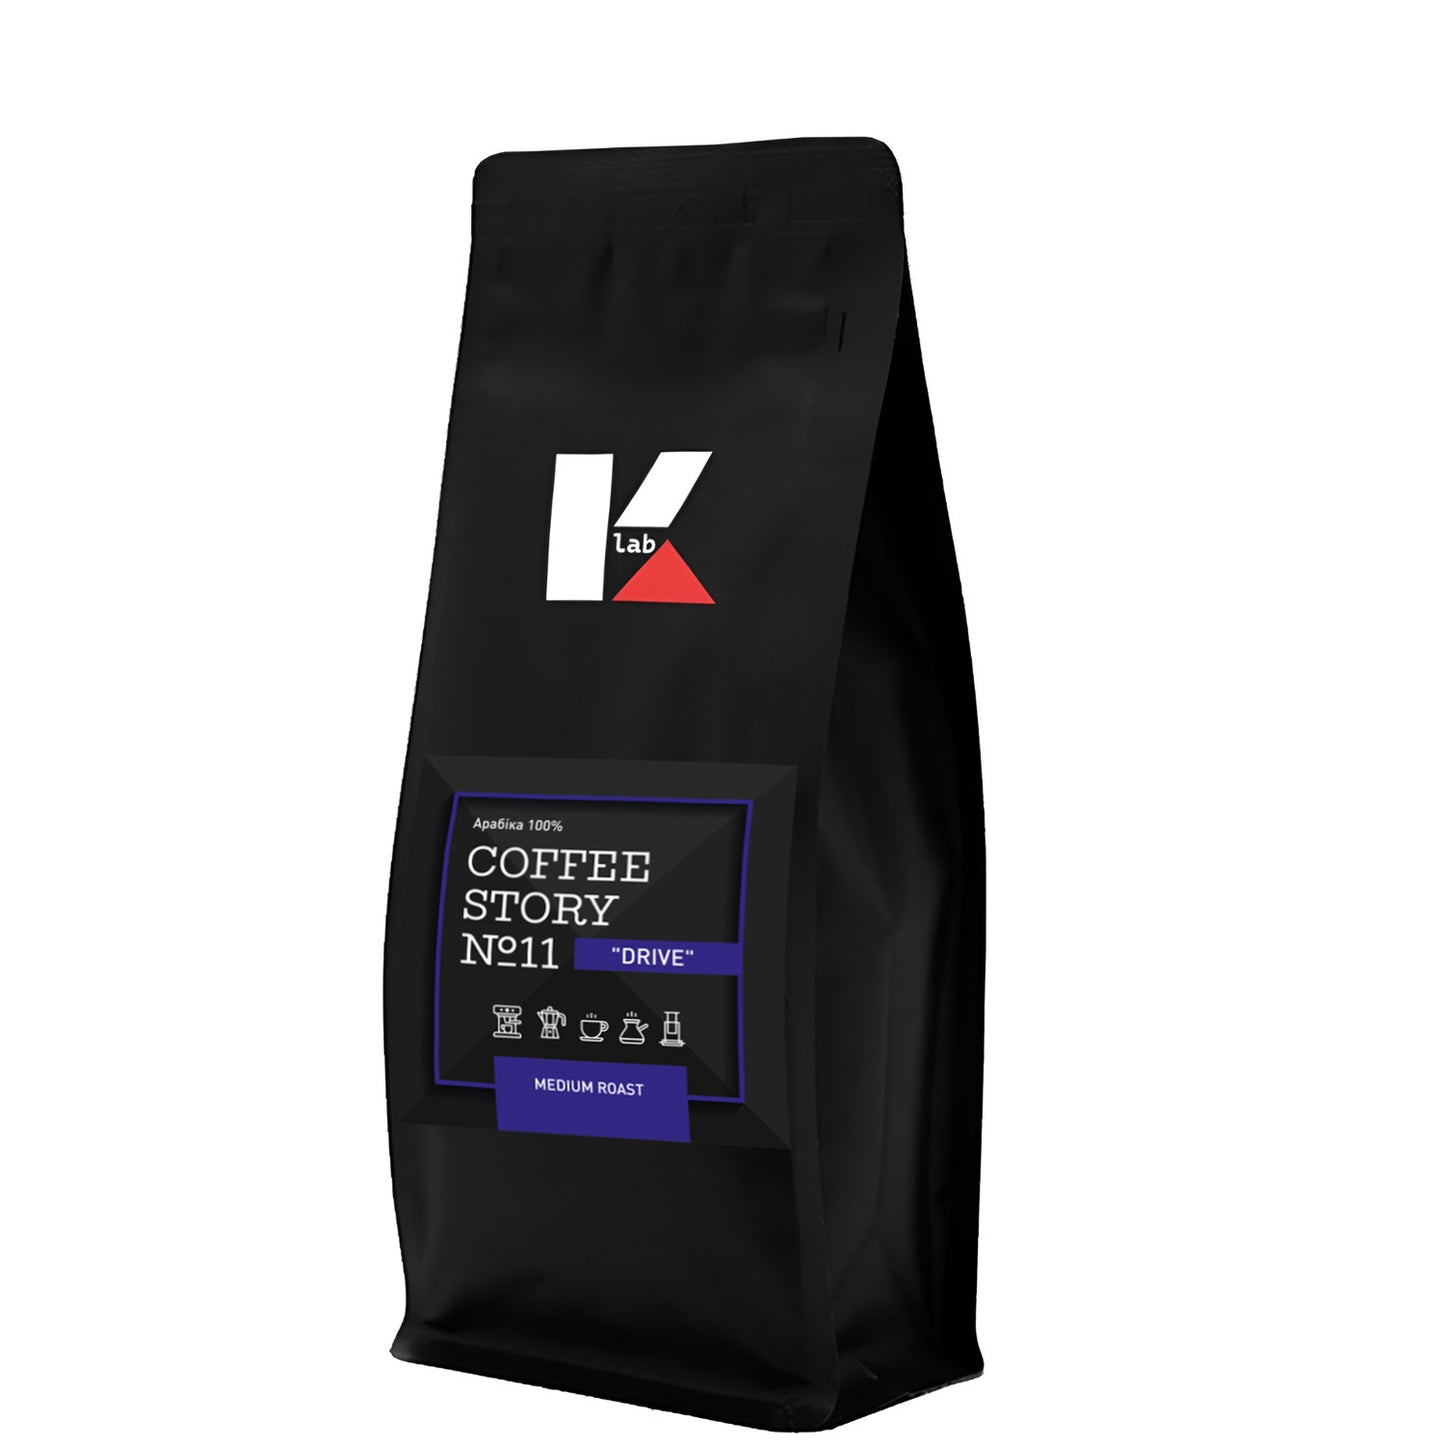 COFFEE STORY №11 - Klab (1kg front)